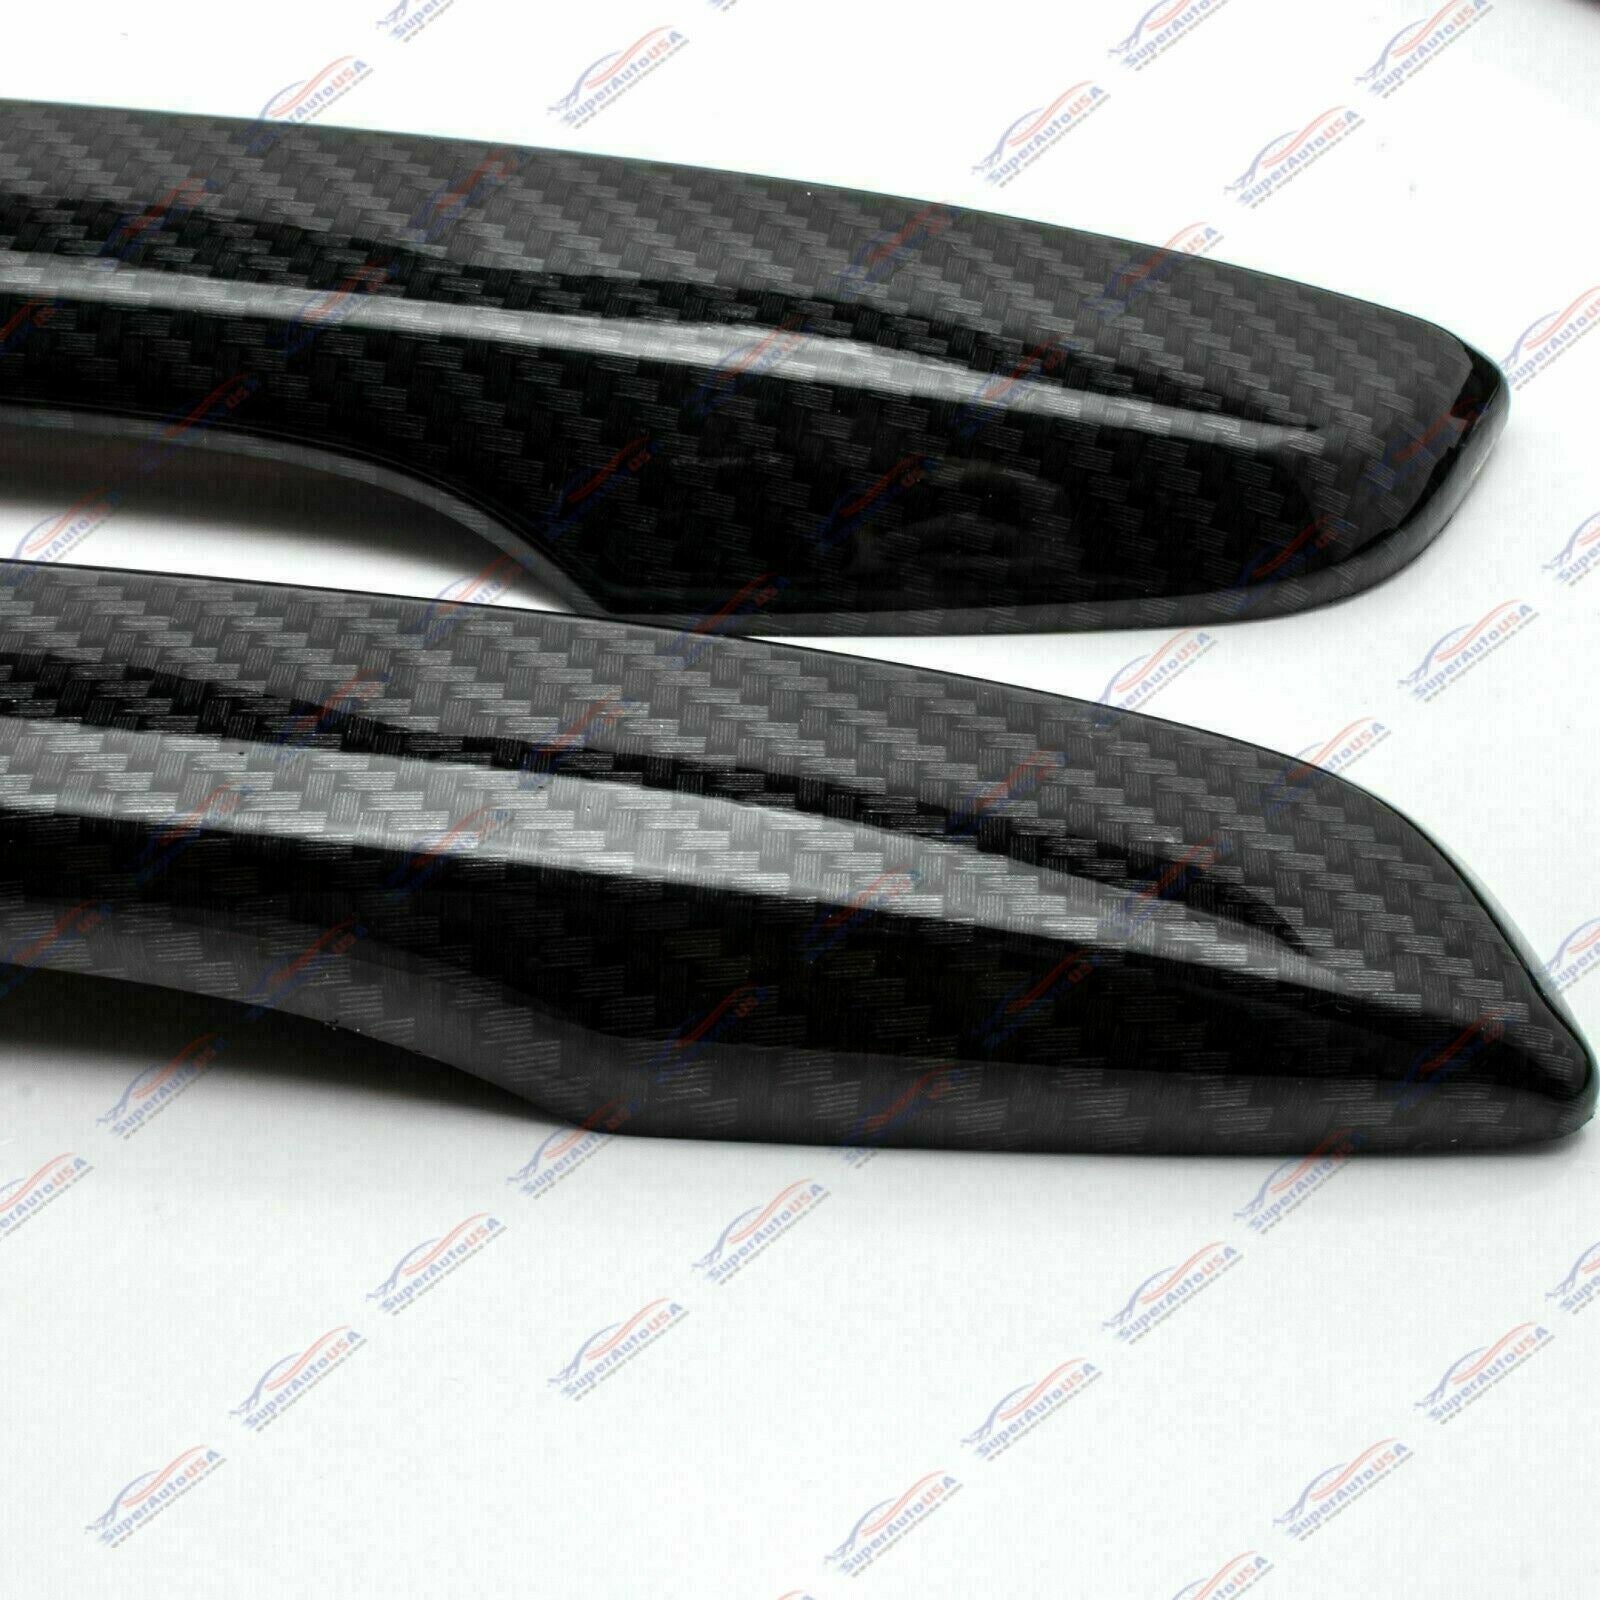 Fit 2012-2016 Honda CR-V CRV Driver Passenger Side Door Handle Covers Trim (Carbon Fiber Print)